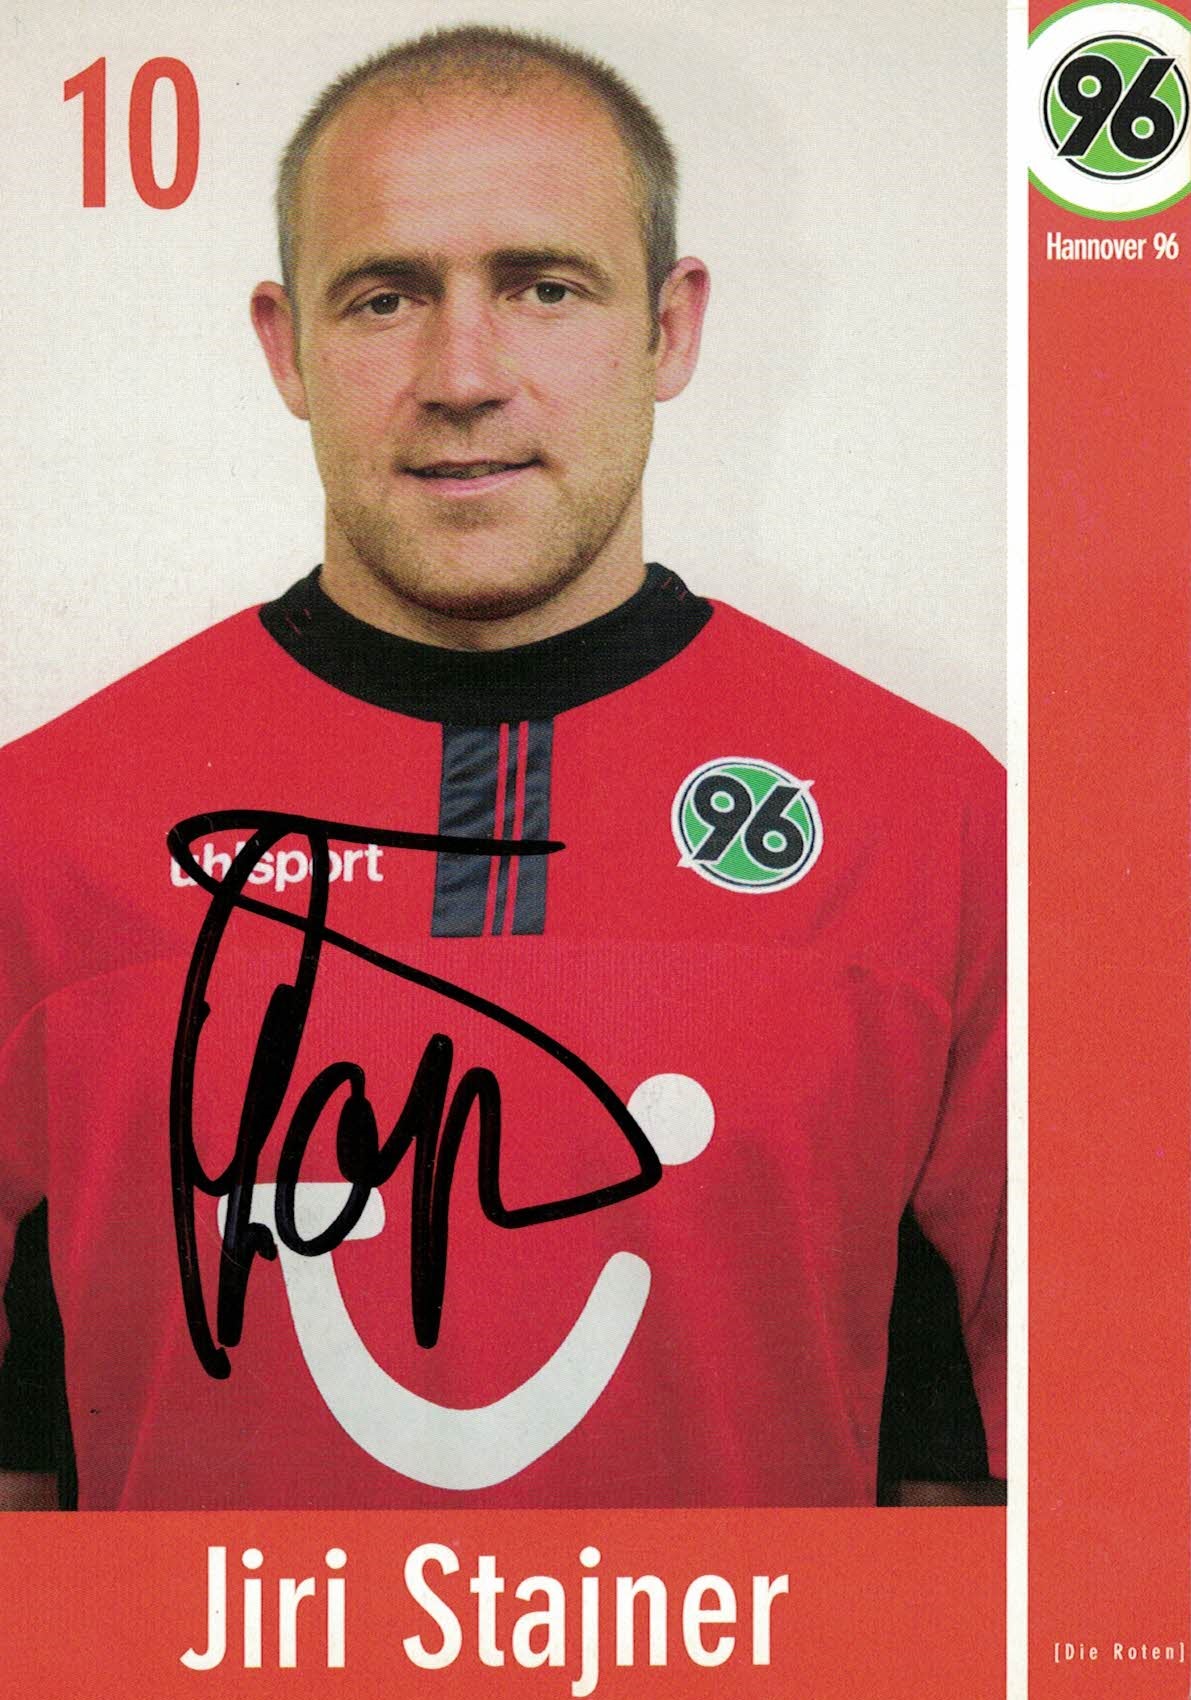 Jiri Stajner Hannover 96 2002/03 Podpisova karta autogram